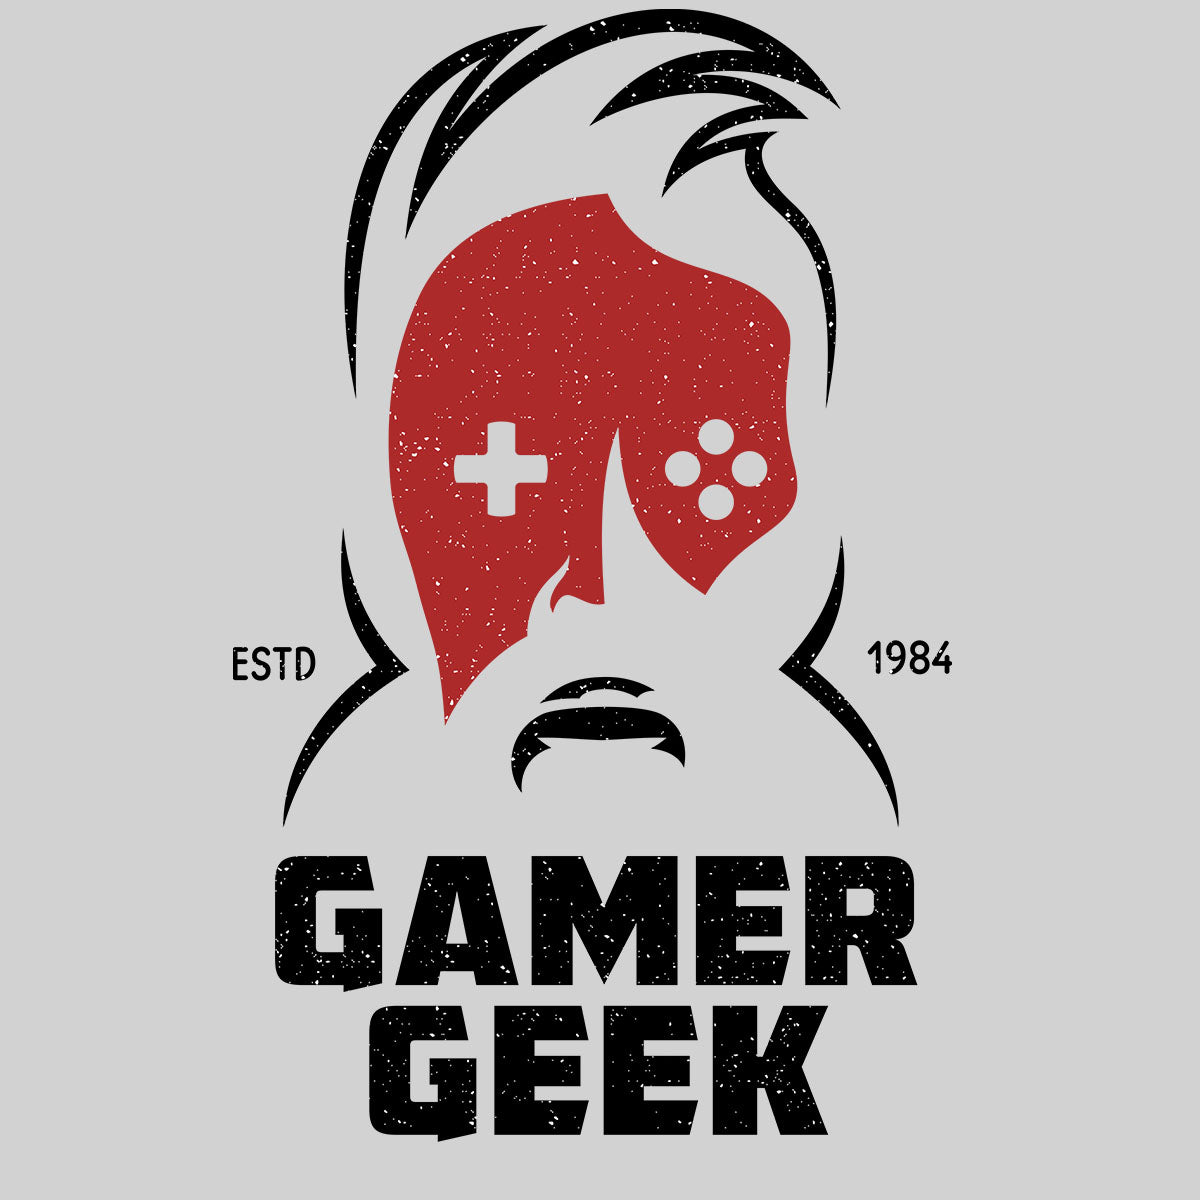 Mens Gaming T-Shirt Old School Gamer Retro Video Game Gamer Geek Unisex T-Shirt - Kuzi Tees